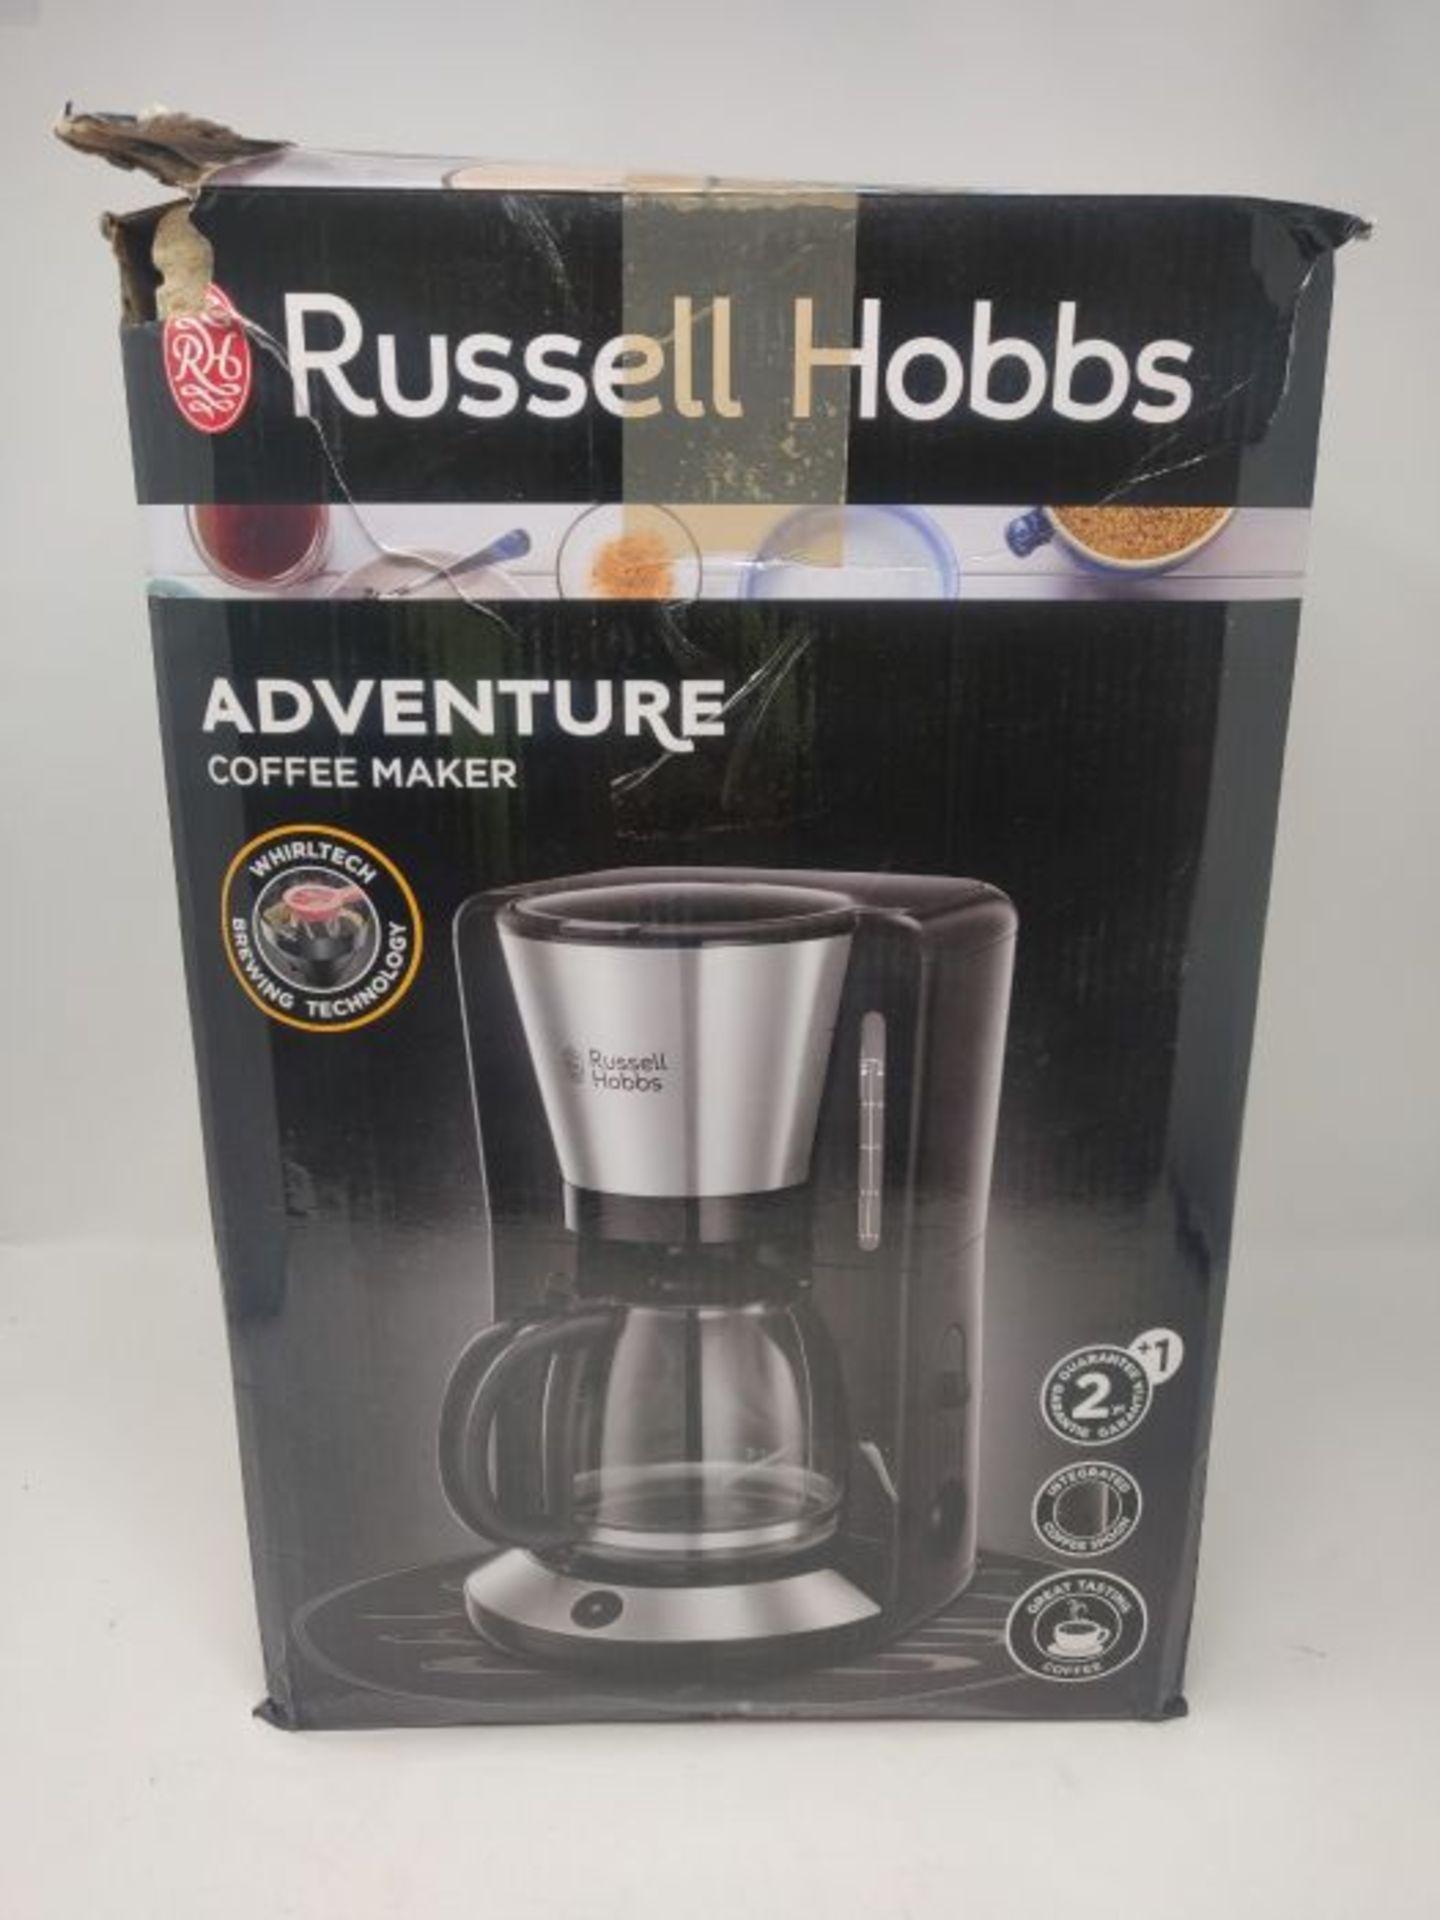 Russell Hobbs 24010-56 Coffee Machine Adventure-24010-56, Black - Image 2 of 3